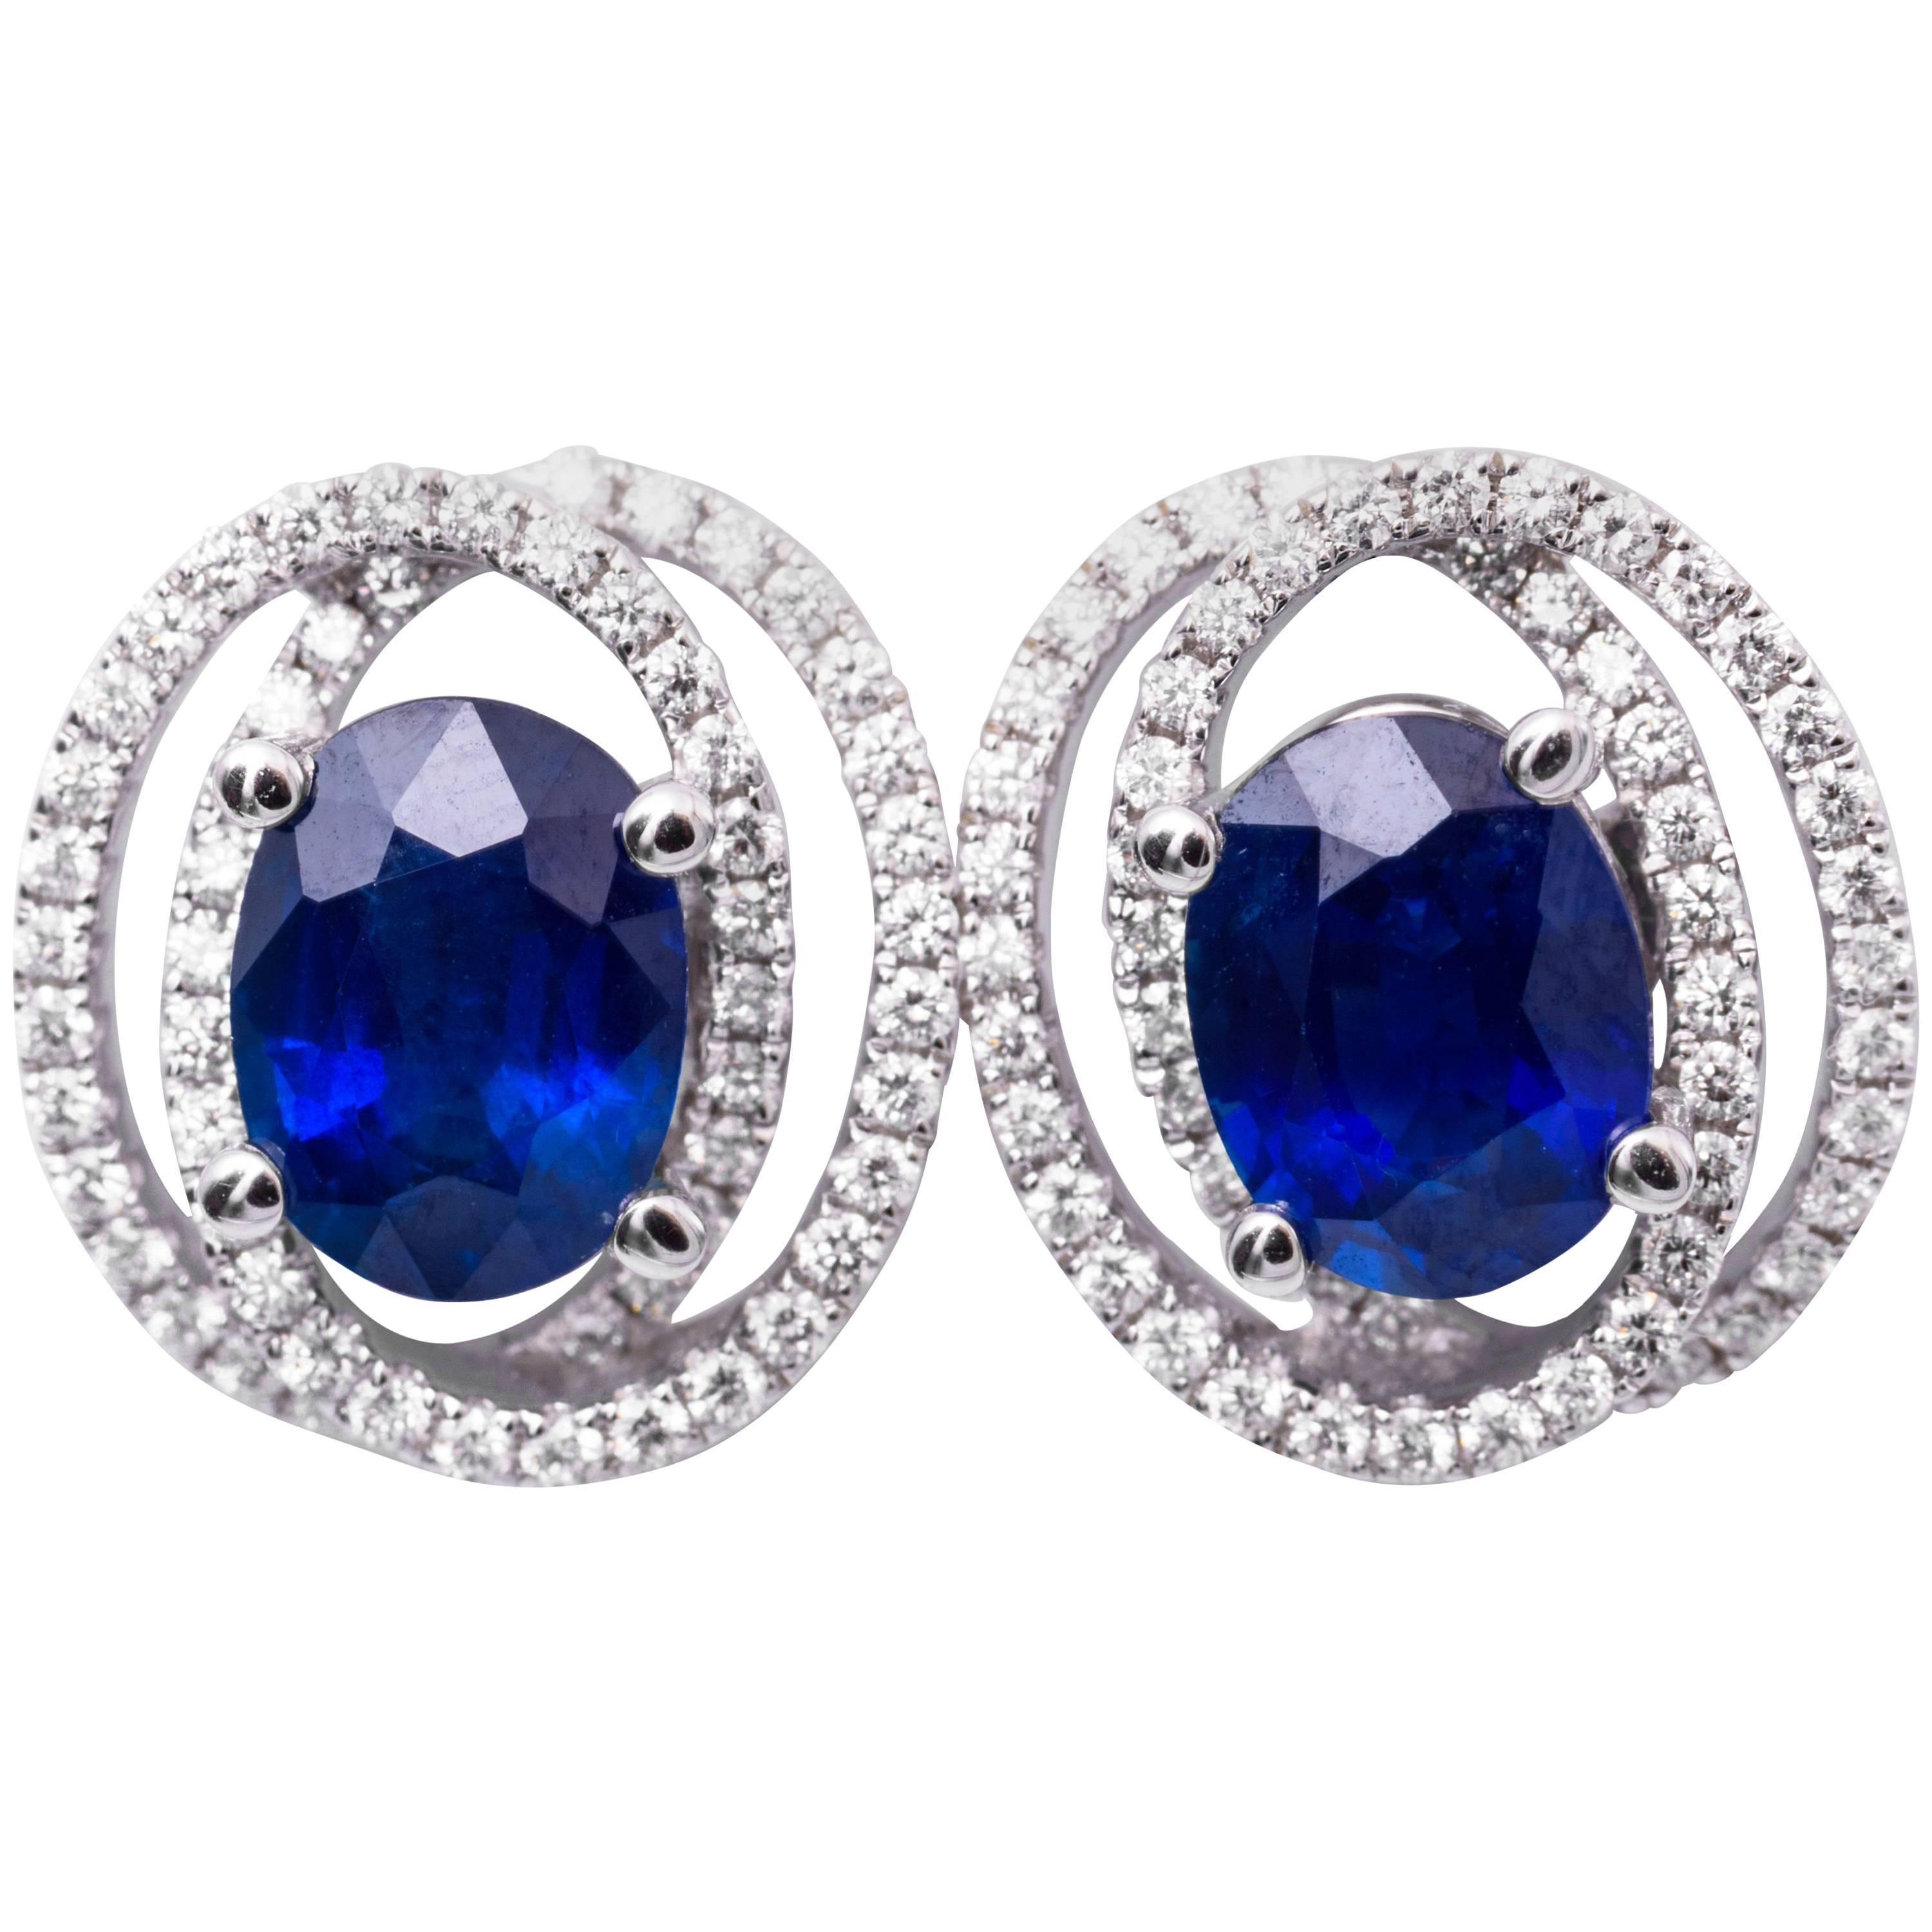 Diamond and Sapphire Studs Earrings